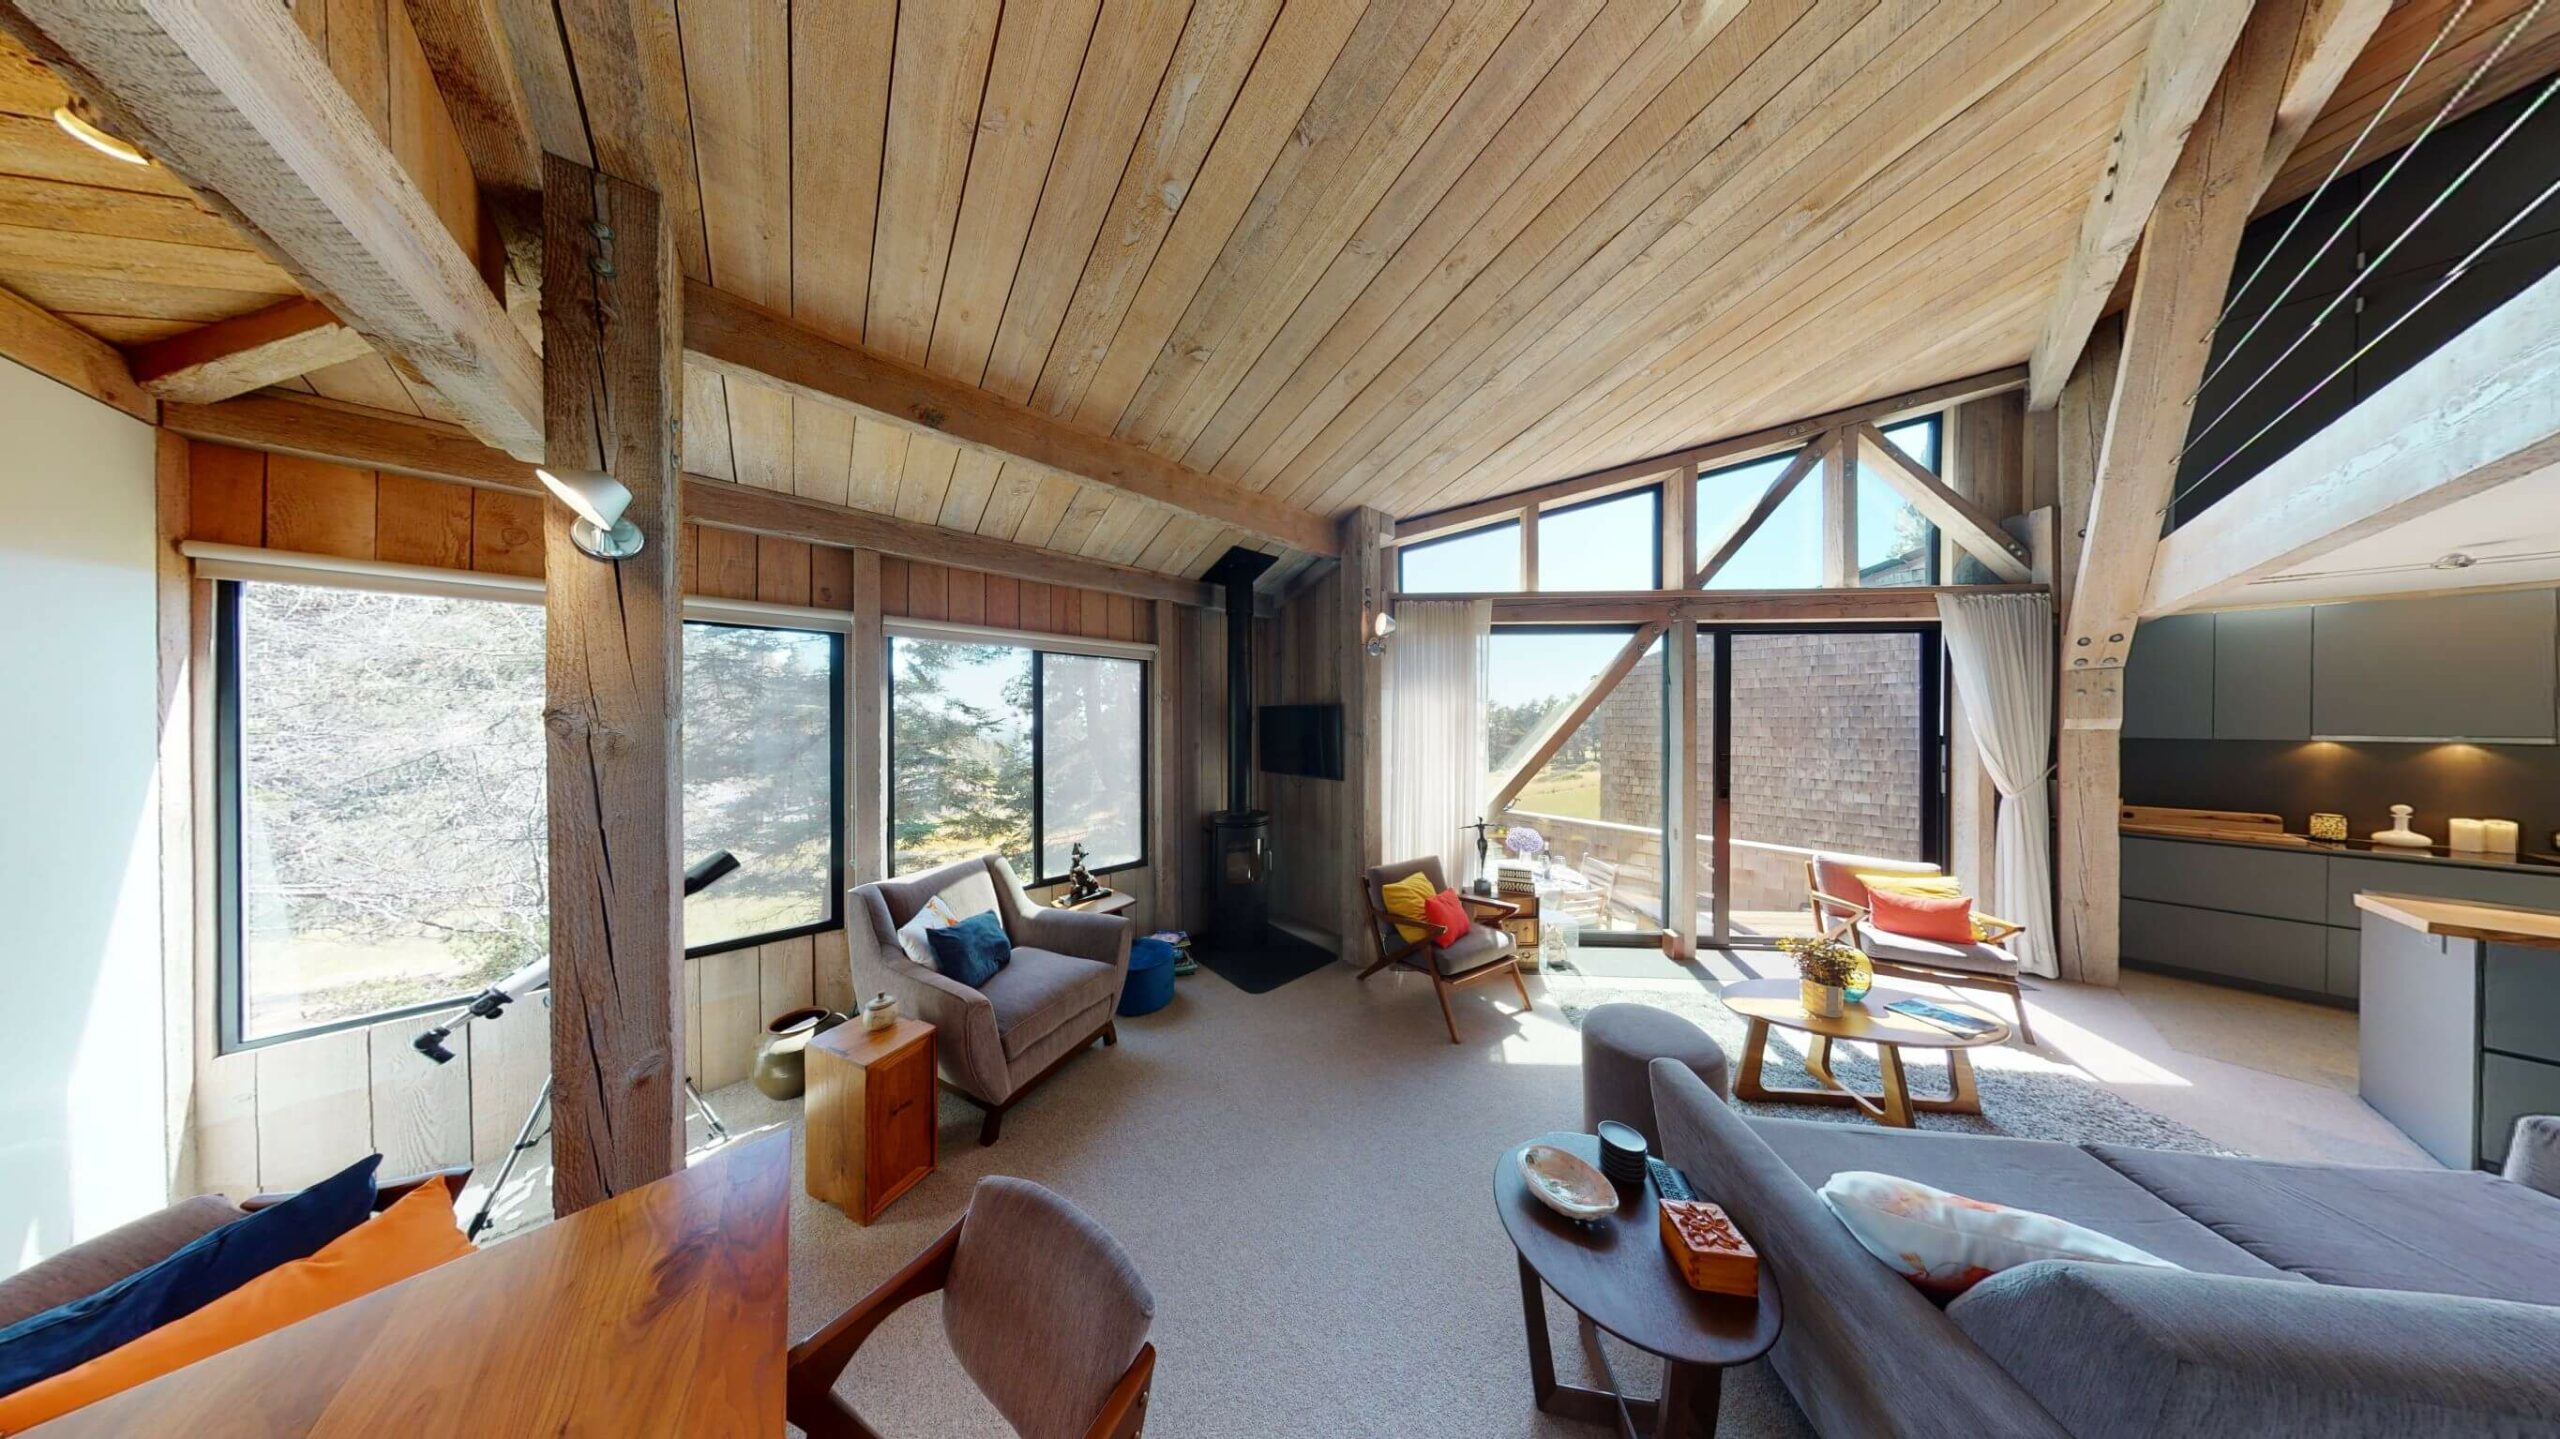 Seaview living room wood beam ceilings and large windows